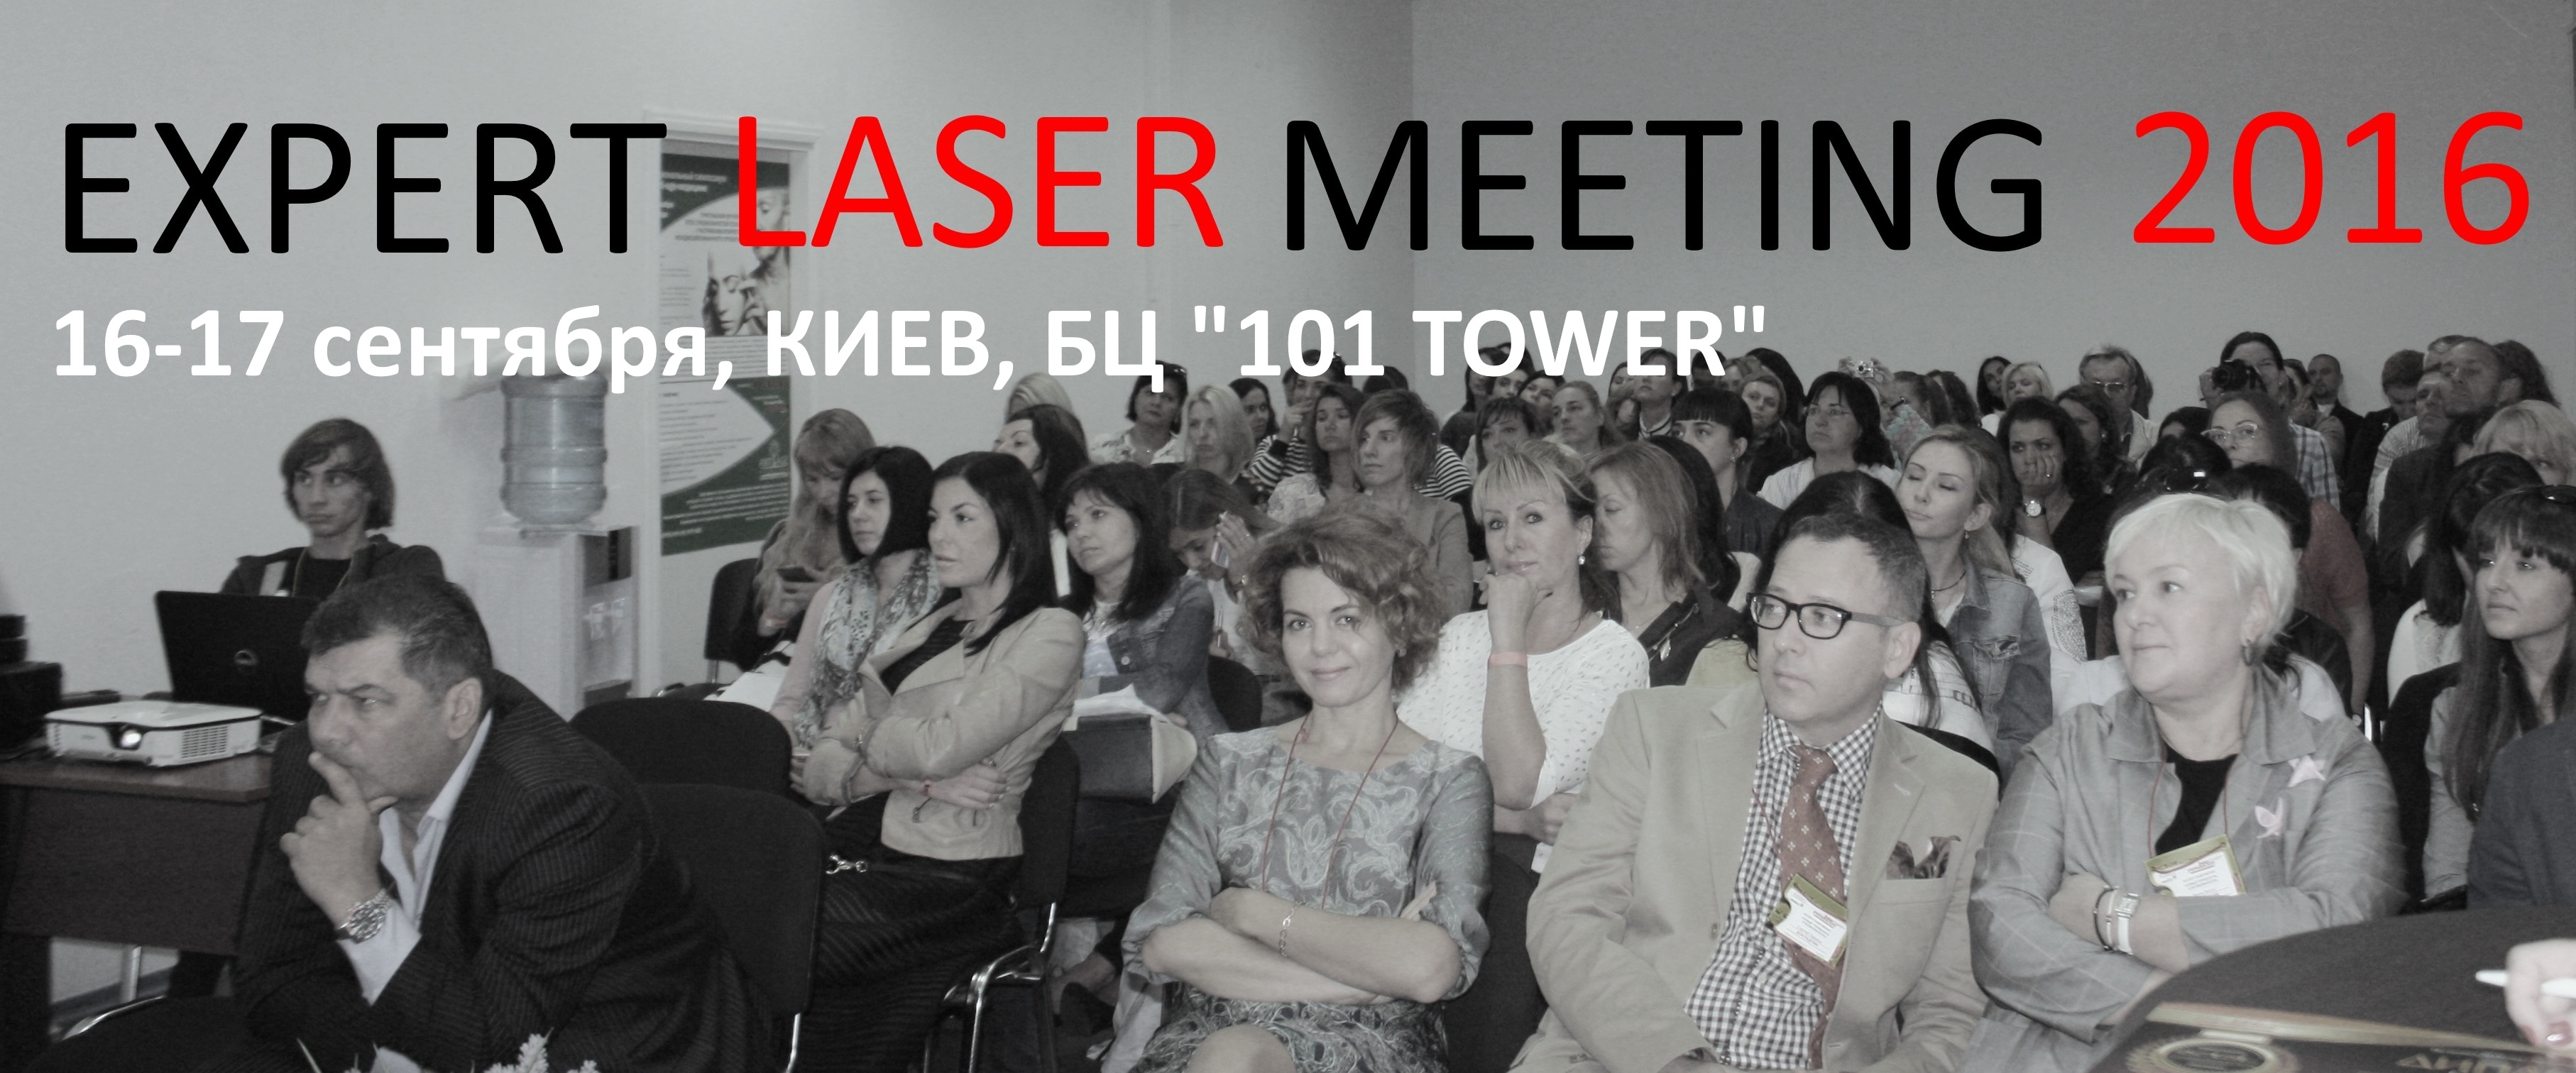 xpert Laser Meeting 16-17 .    , , ,   